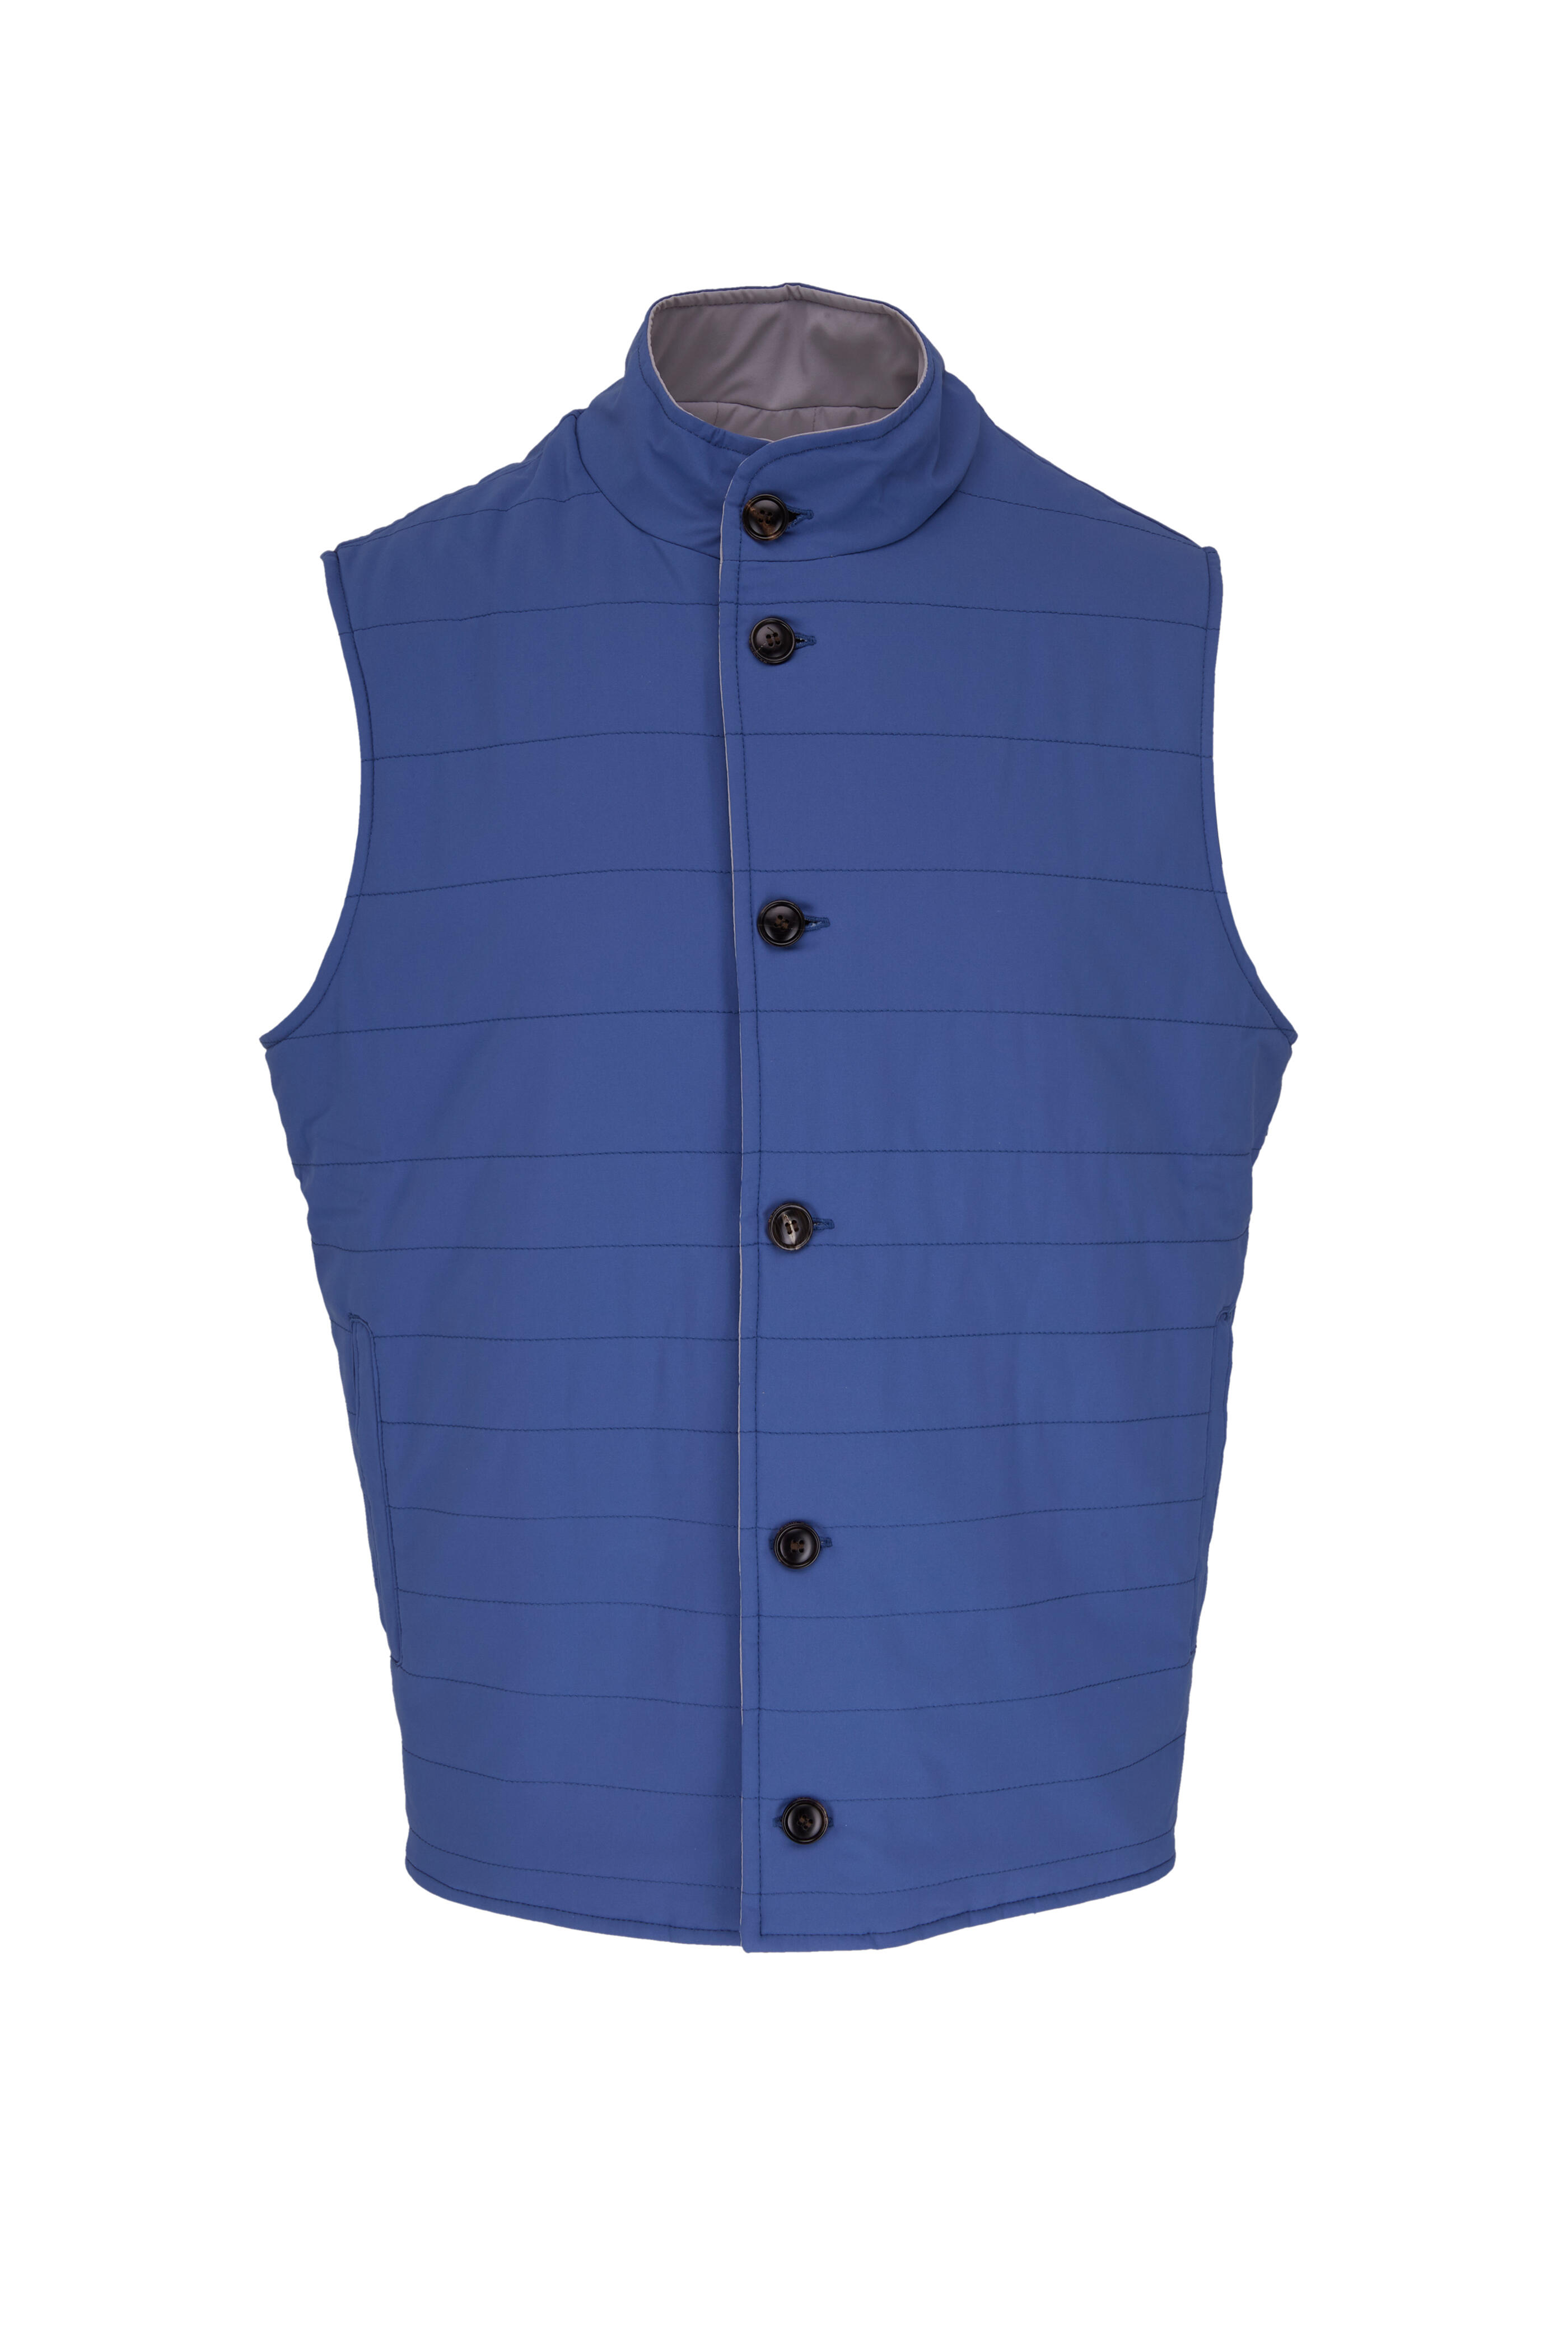 Peter Millar - Ocean Blue & Gray Reversible Vest